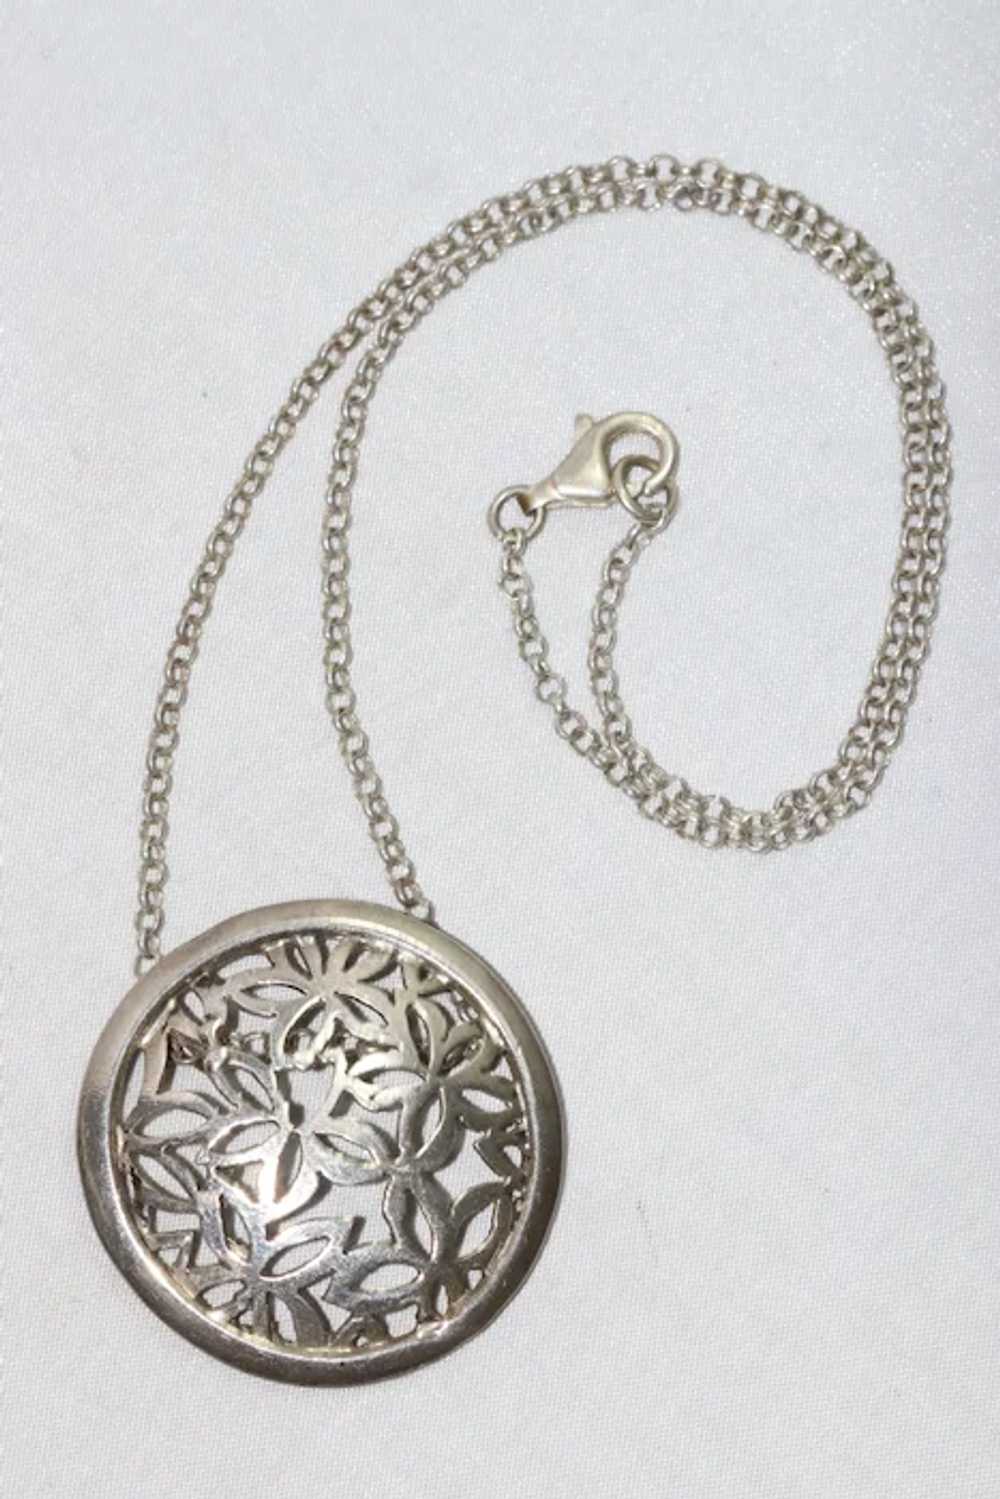 Vintage Sterling Silver Flowers Necklace - image 3